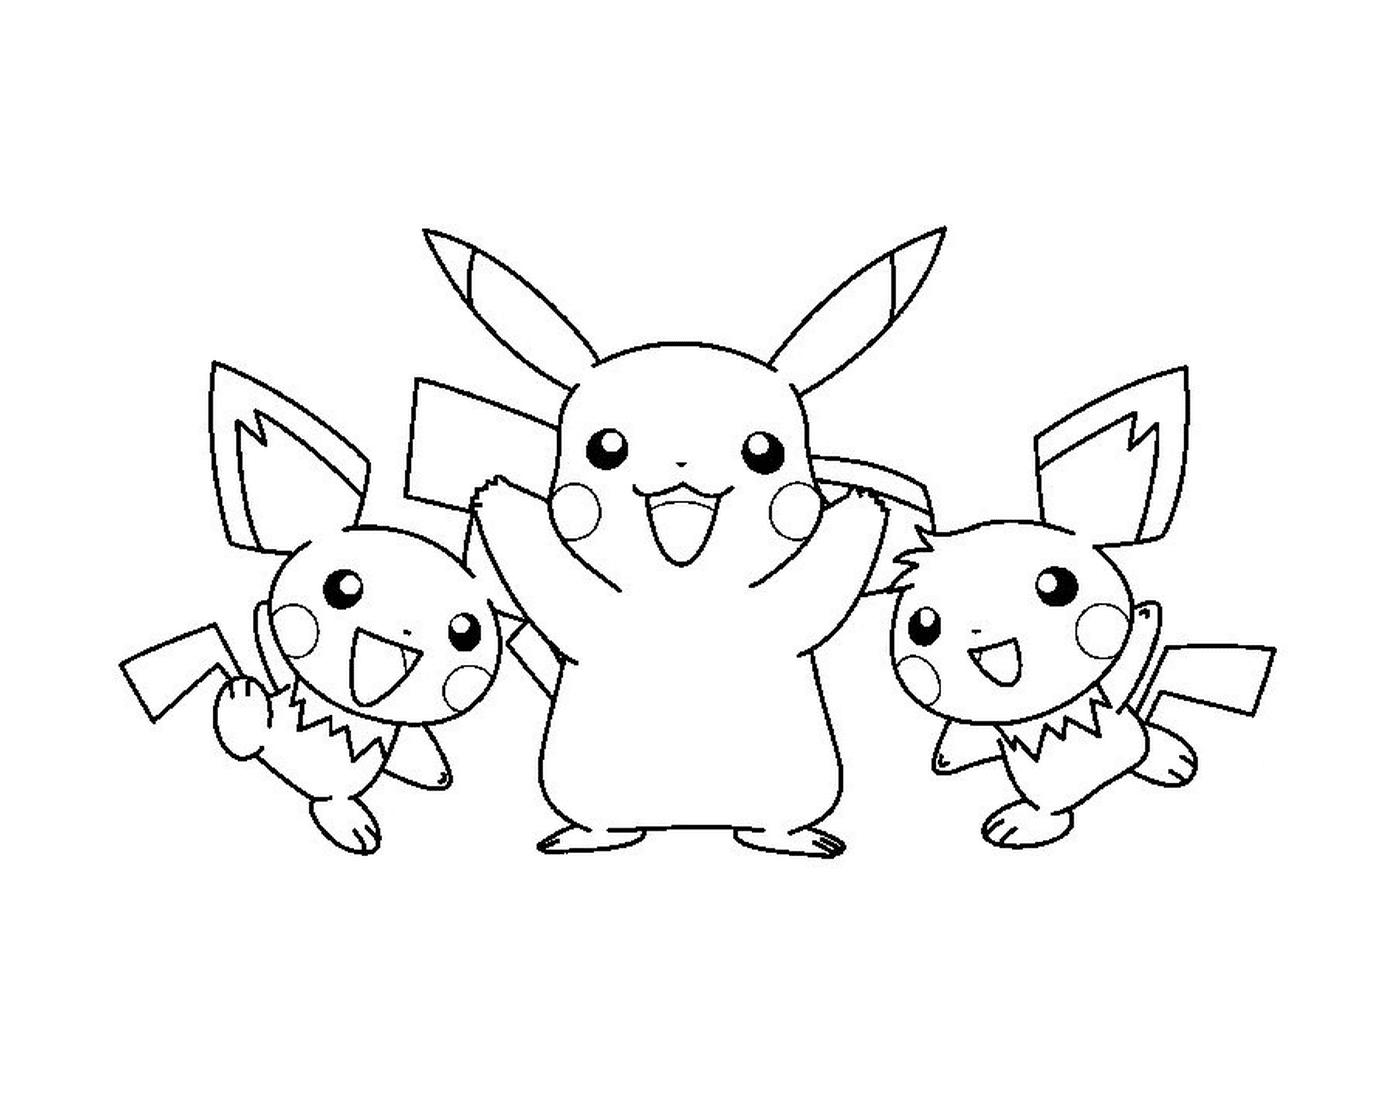   Trois Pokémon réunis ensemble 